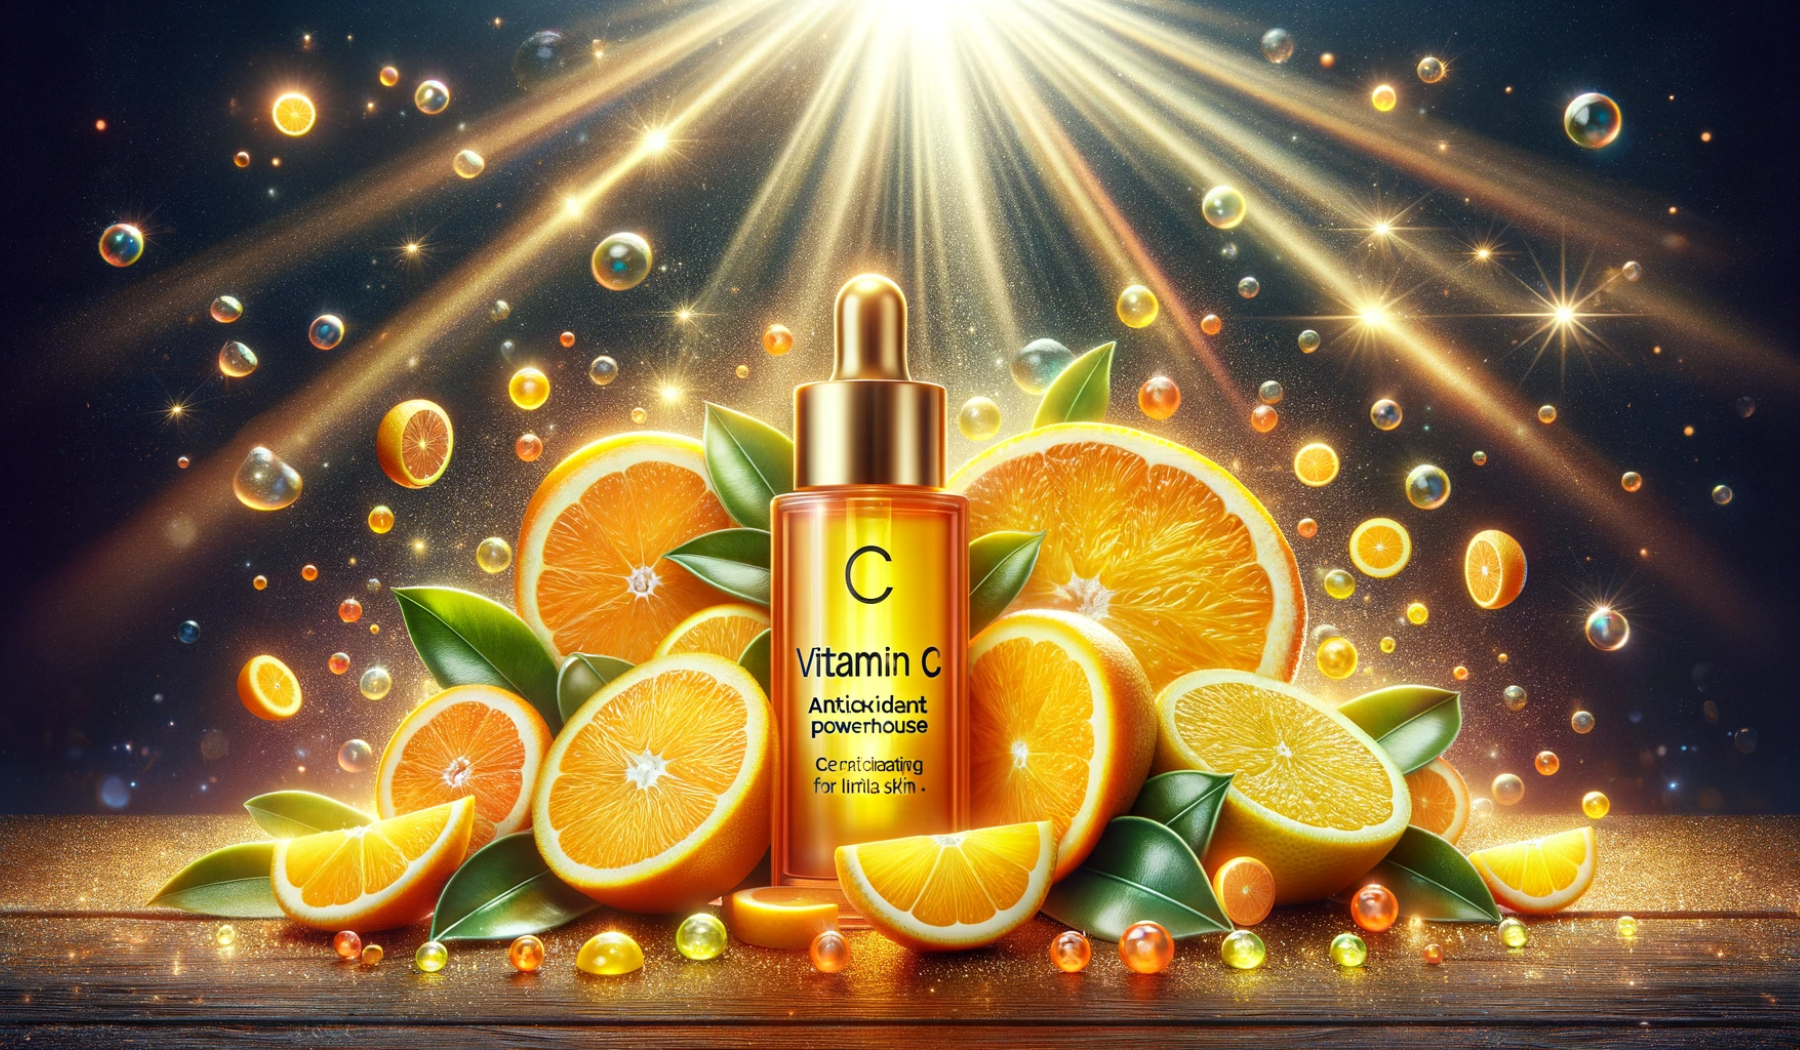 Vitamin C: The Antioxidant Powerhouse for Luminous Skin